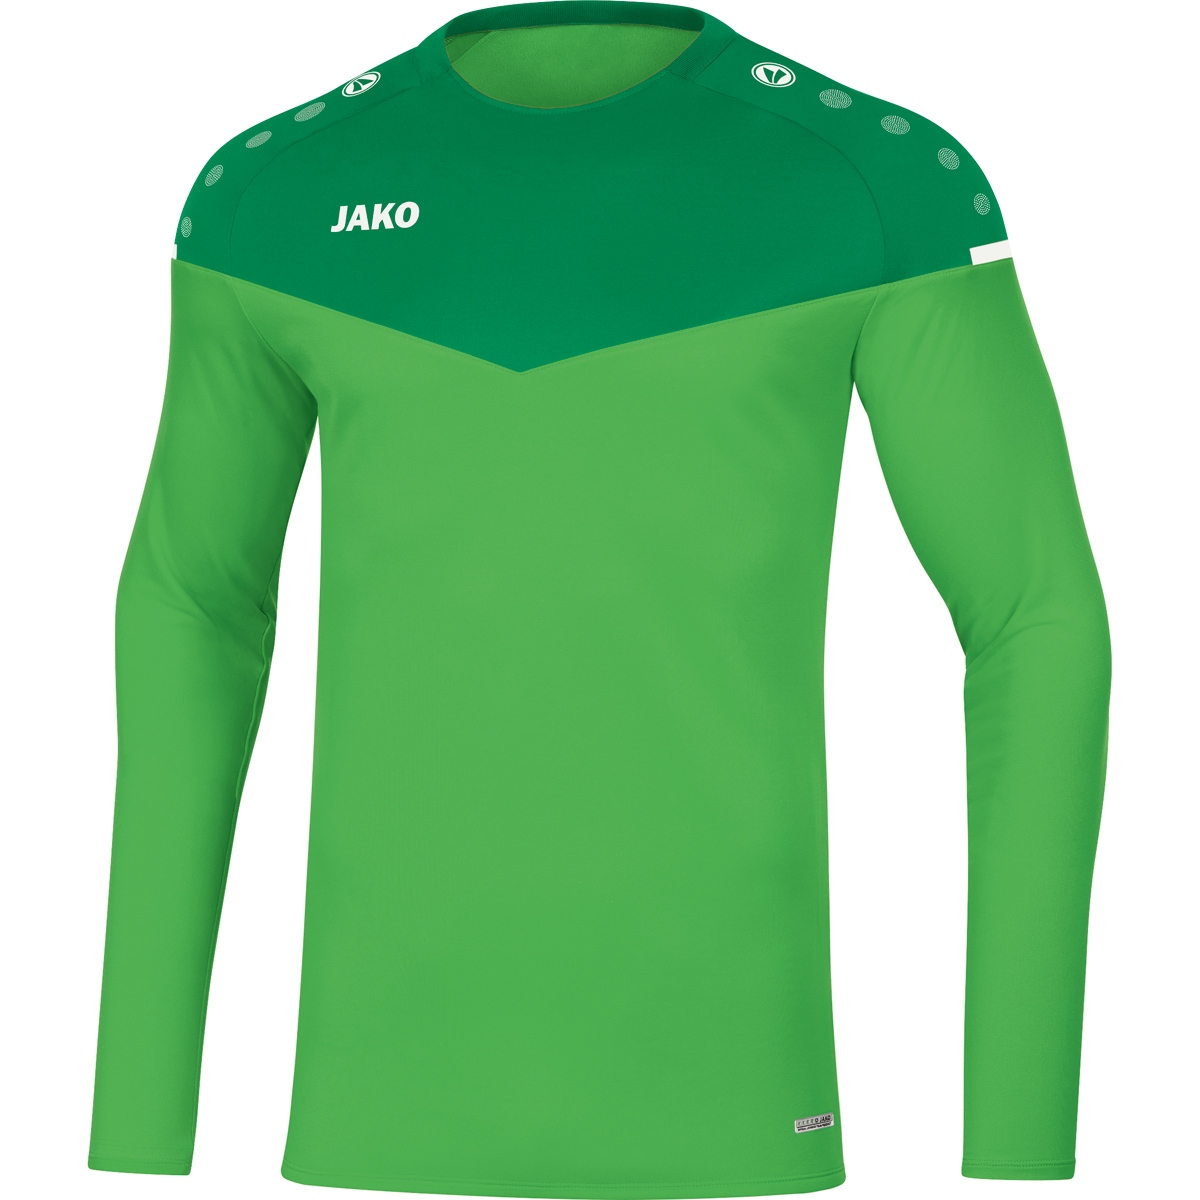 JAKO Sweat Champ M, 8820 Gr. green/sportgrün, Erwachsene, soft 2.0